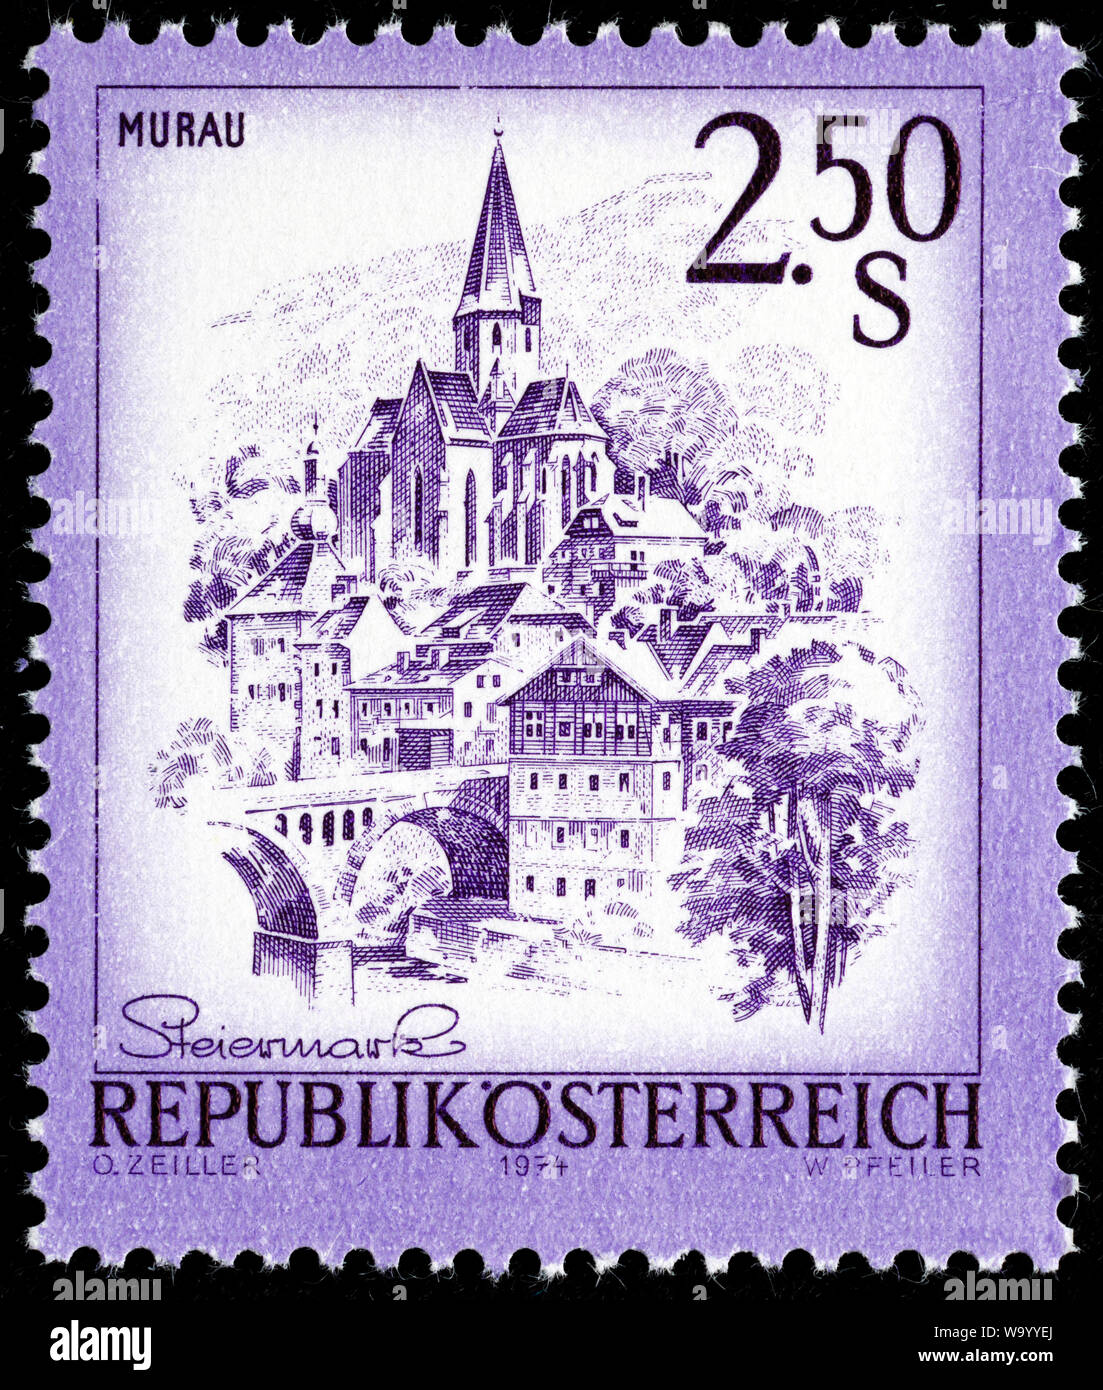 Murau, Styria, postage stamp, Austria, 1974 Stock Photo